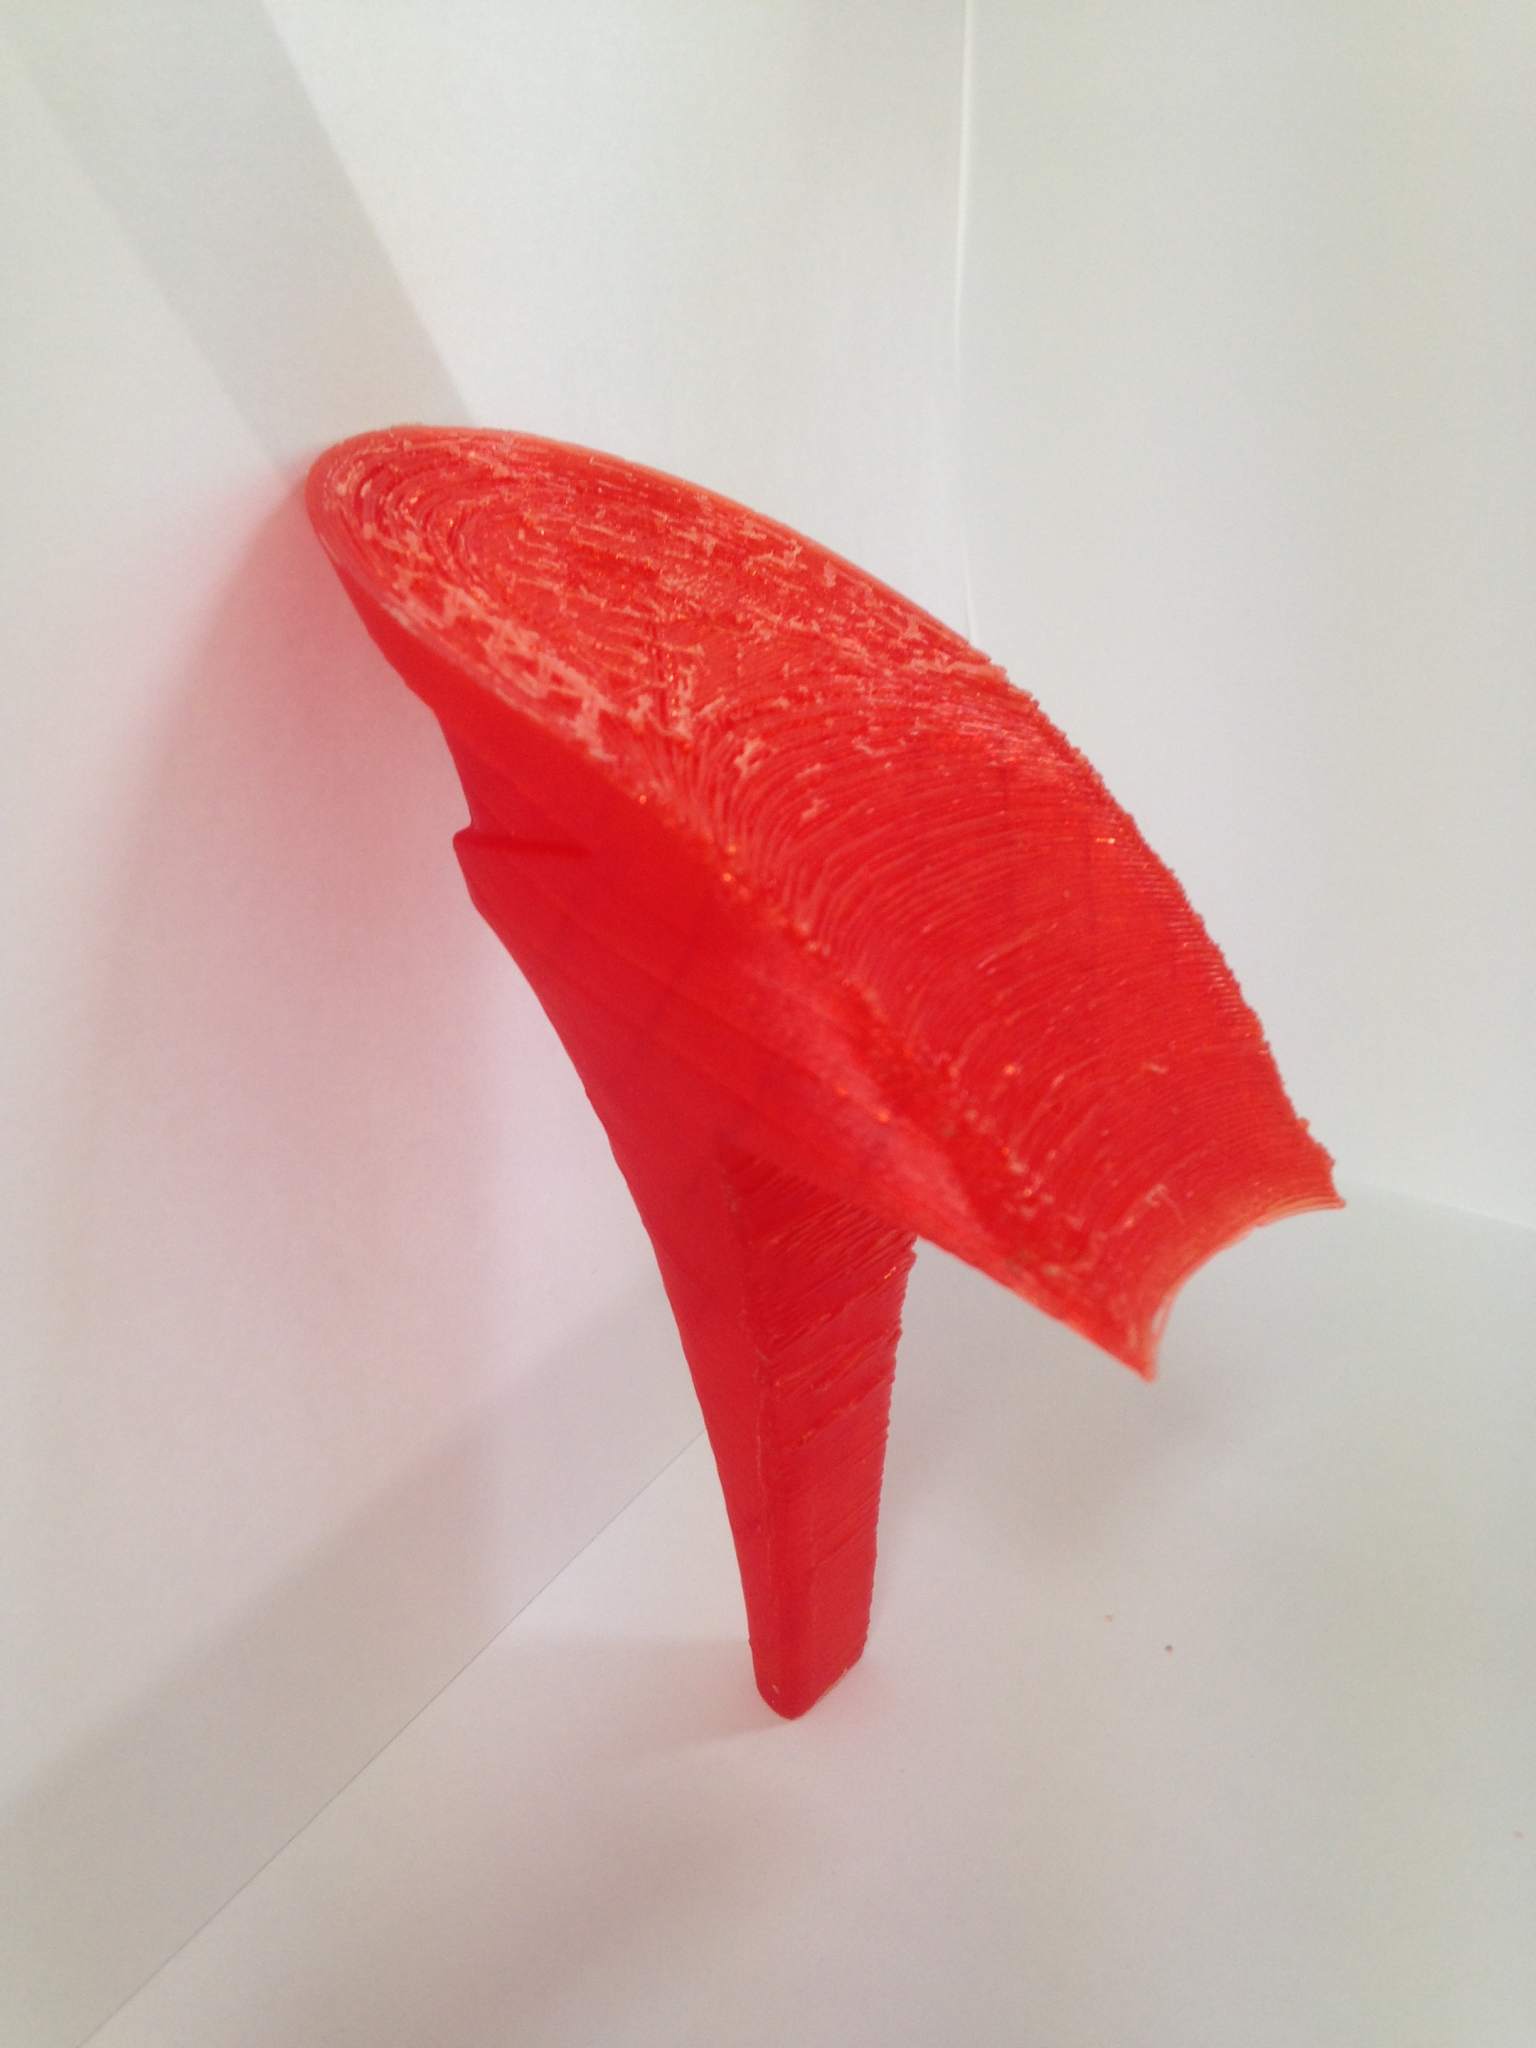 3D printed heel made at the Footwear Polytechnic. Photo via RepRap. 